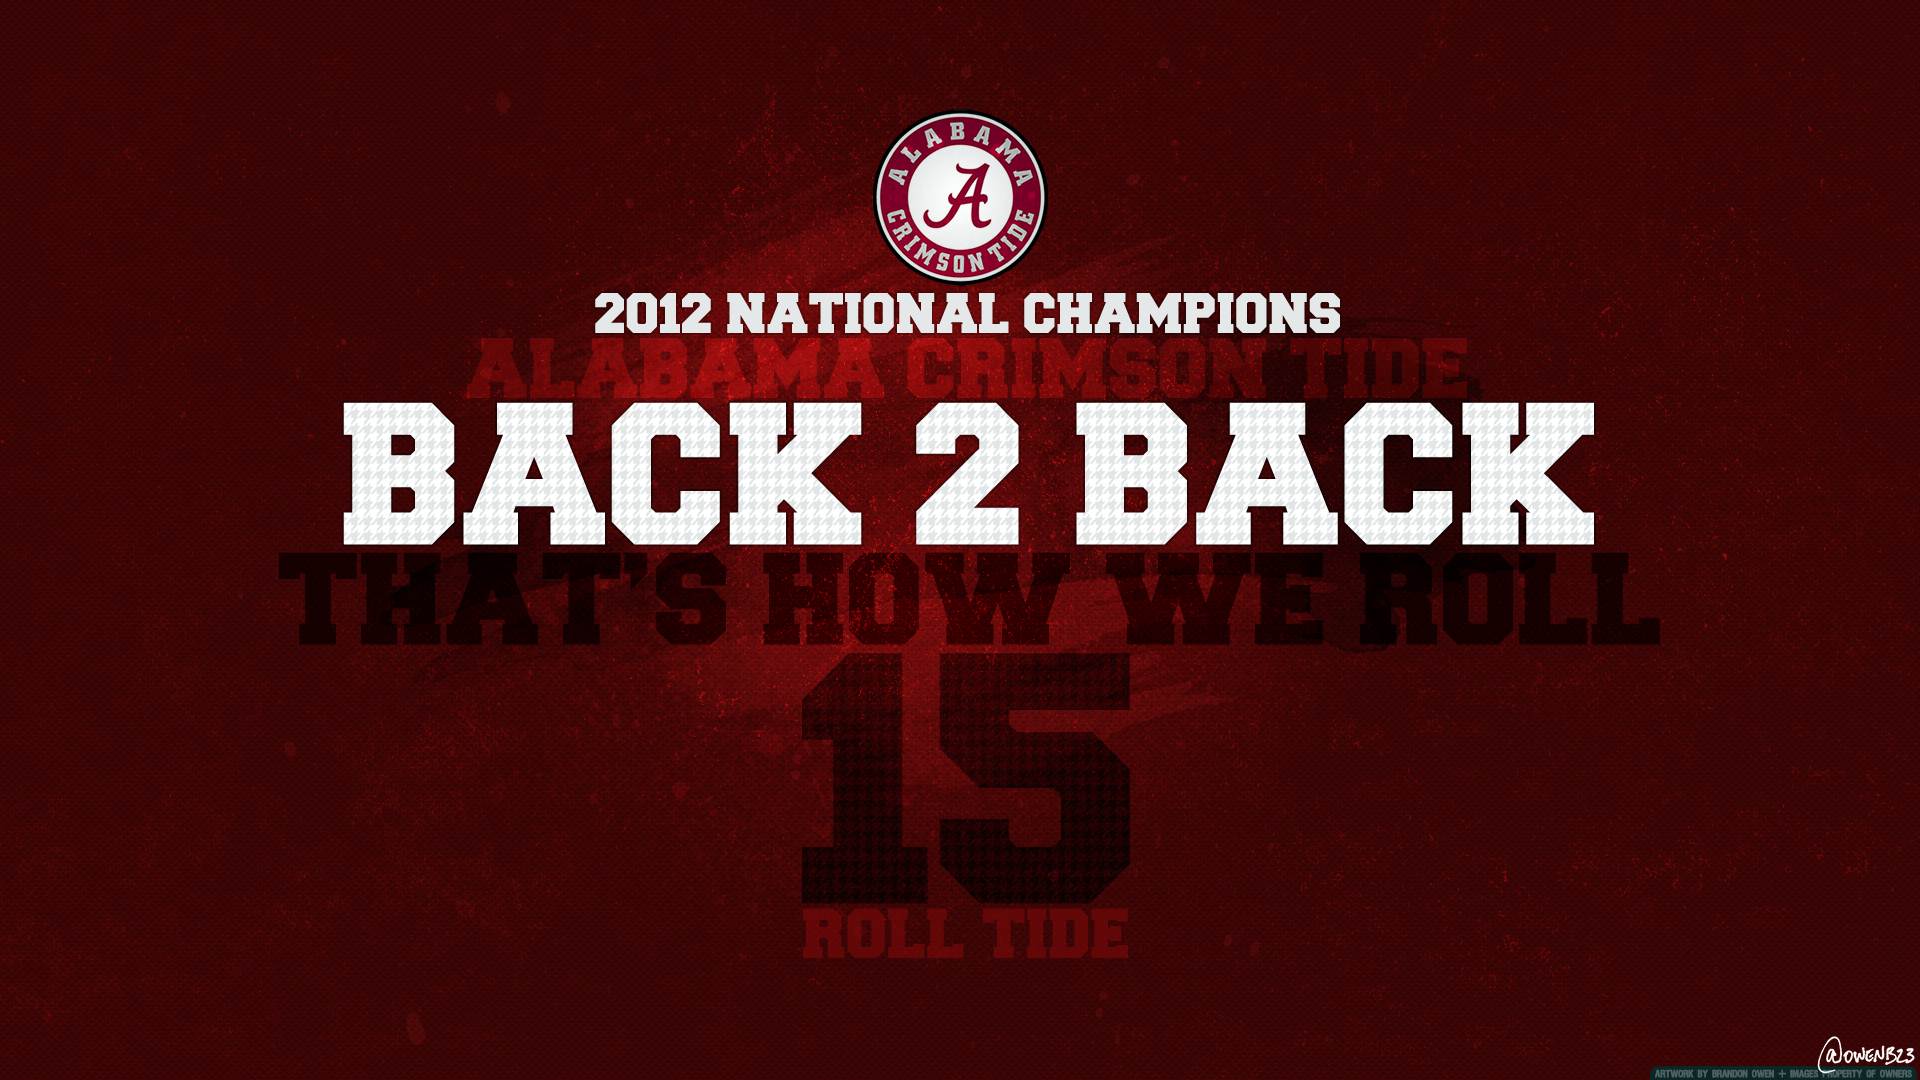 Back 2 Back Alabama University Football Logo Wallpaper. Download